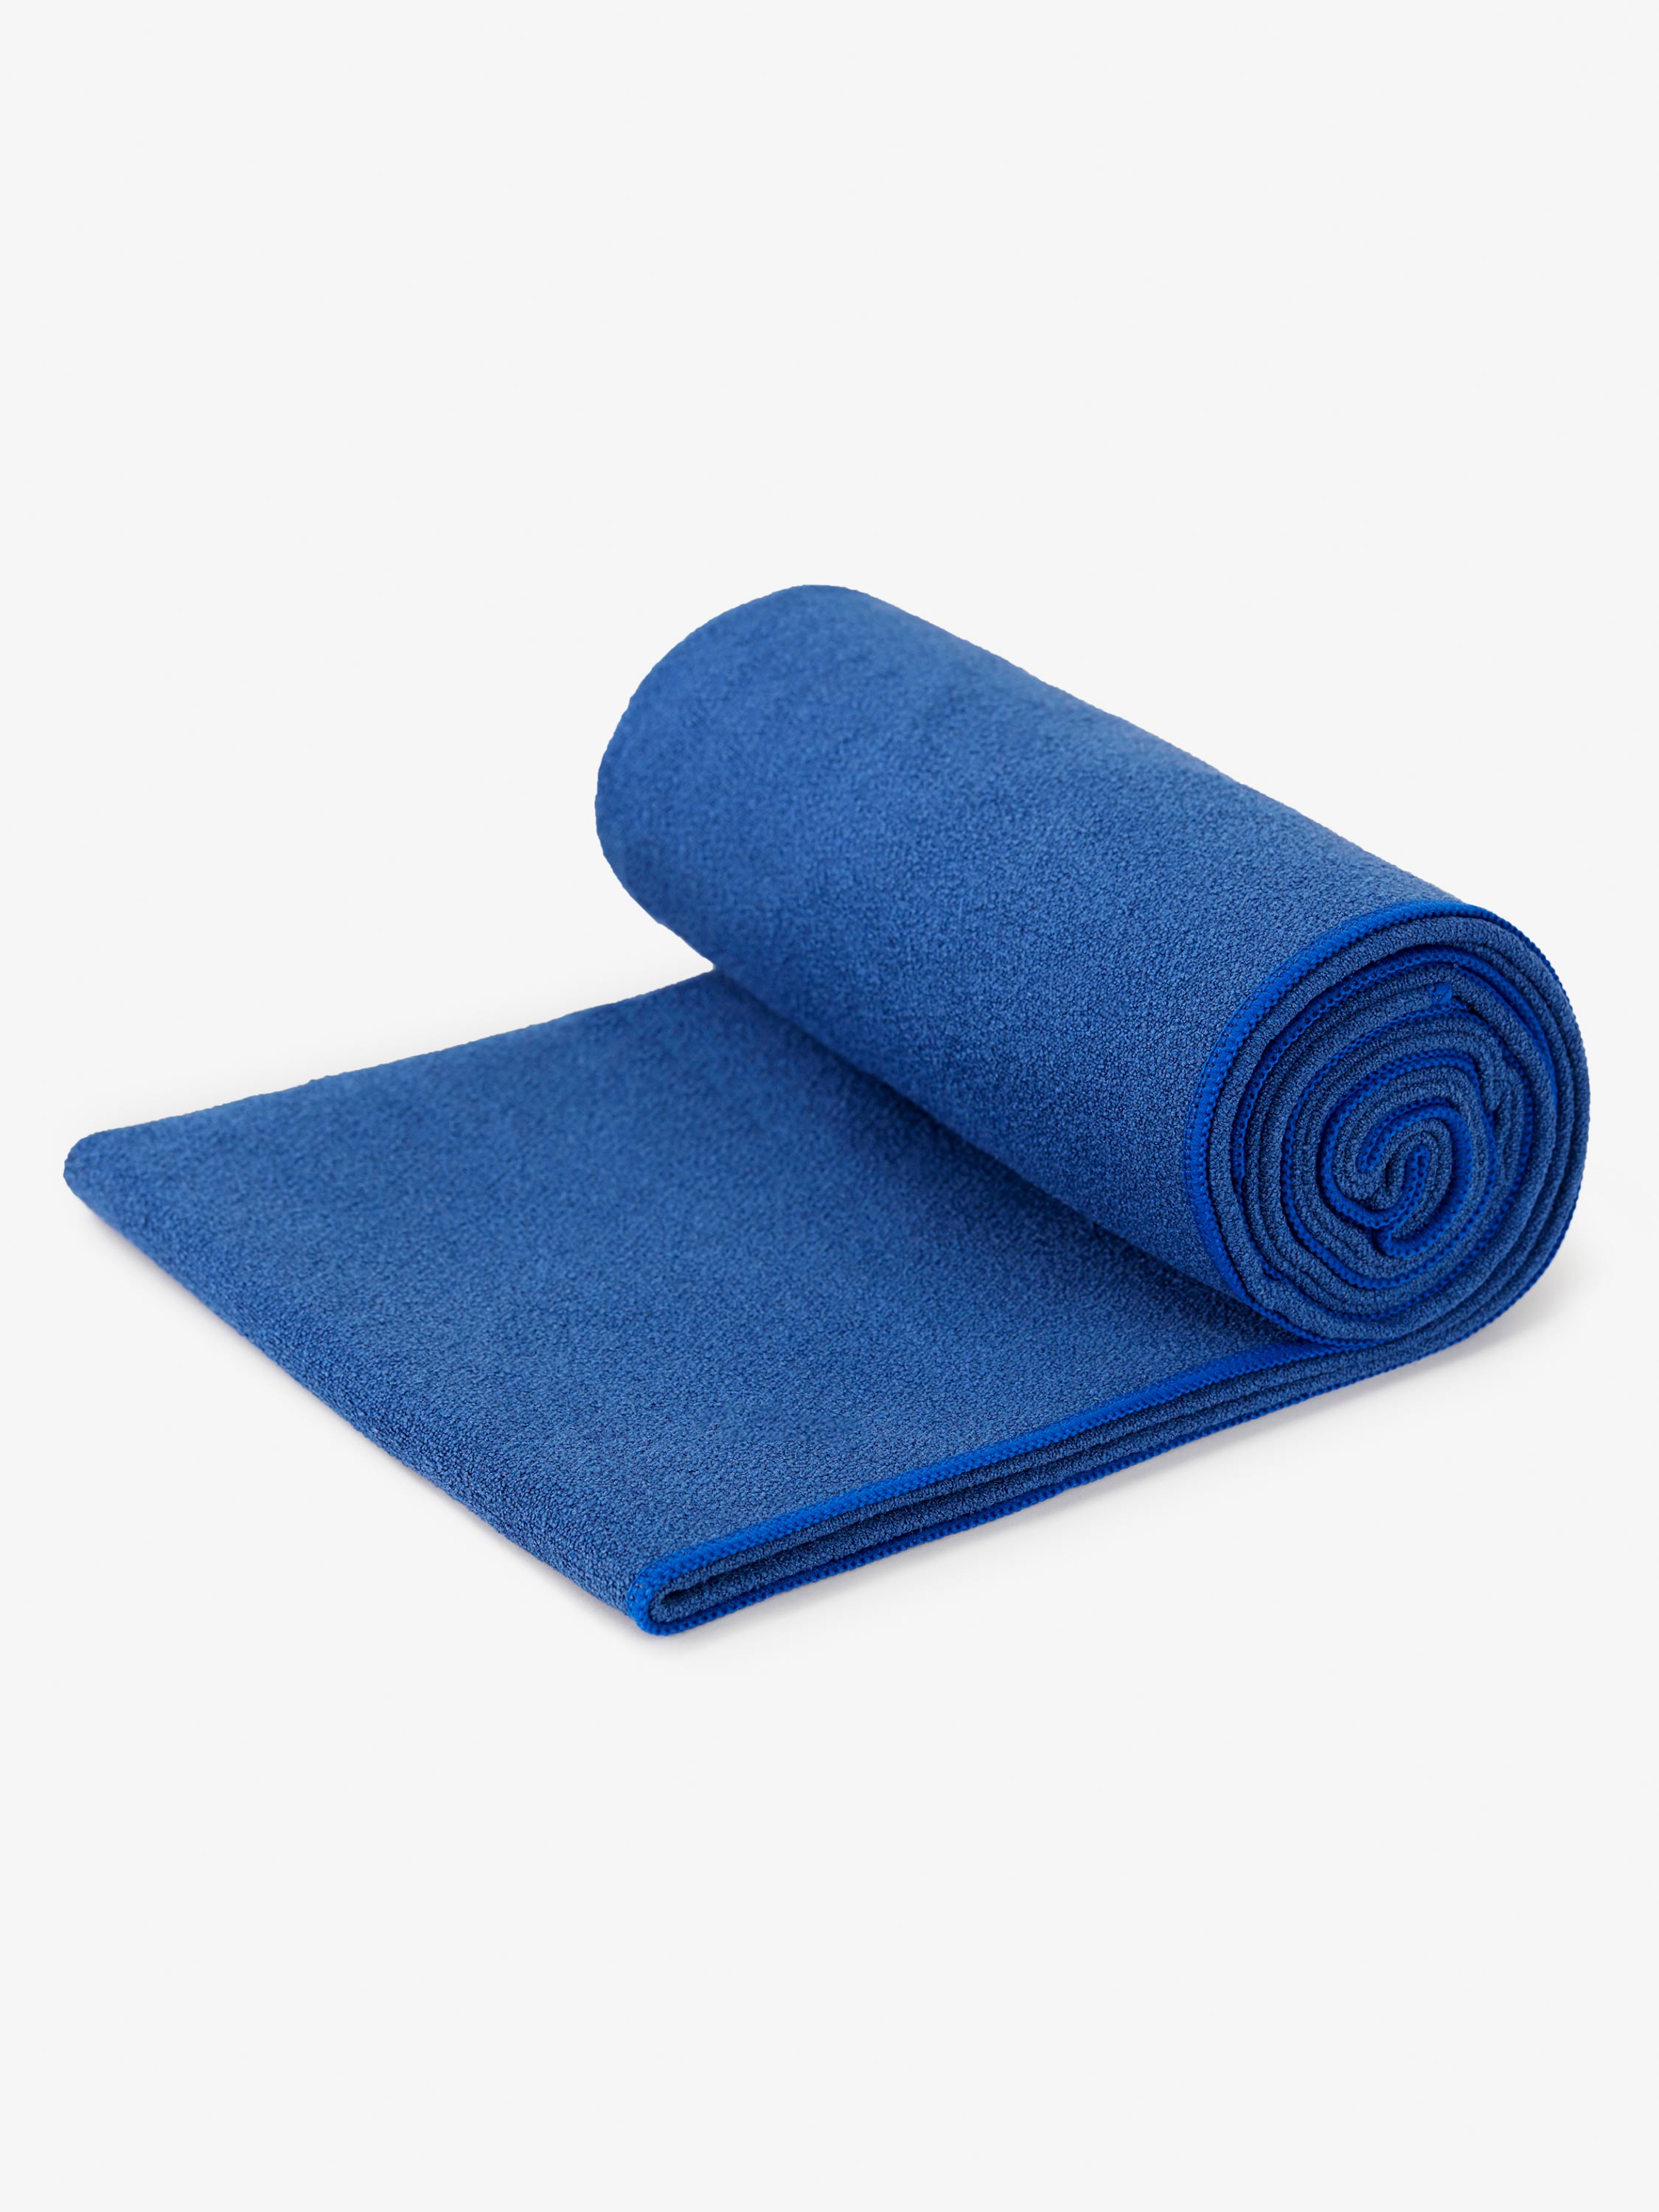 Yoga Mat - Yogtapas Kitty Blue Yoga Mat from New Delhi